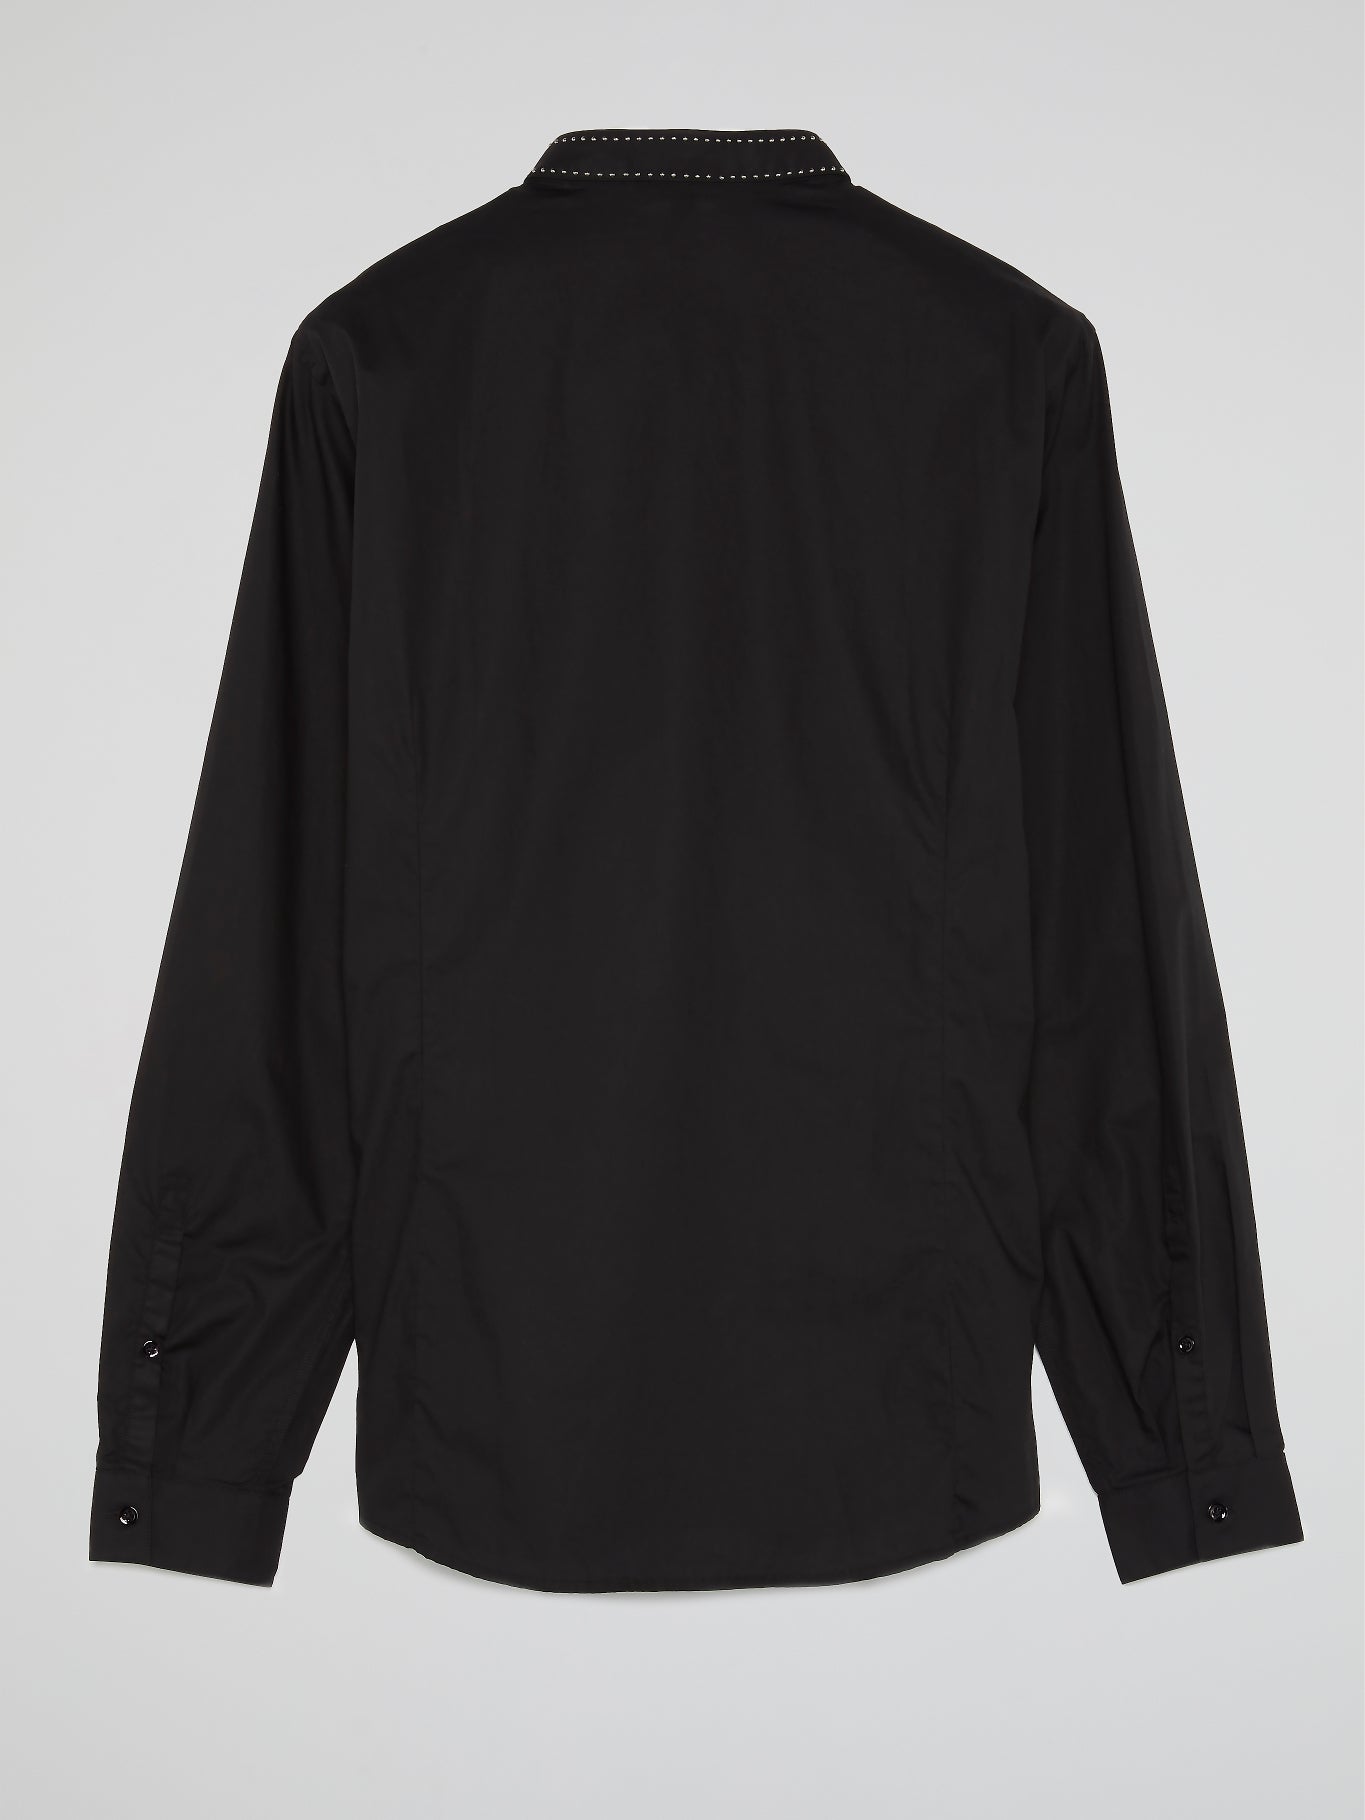 Black Studded Long Sleeve Shirt